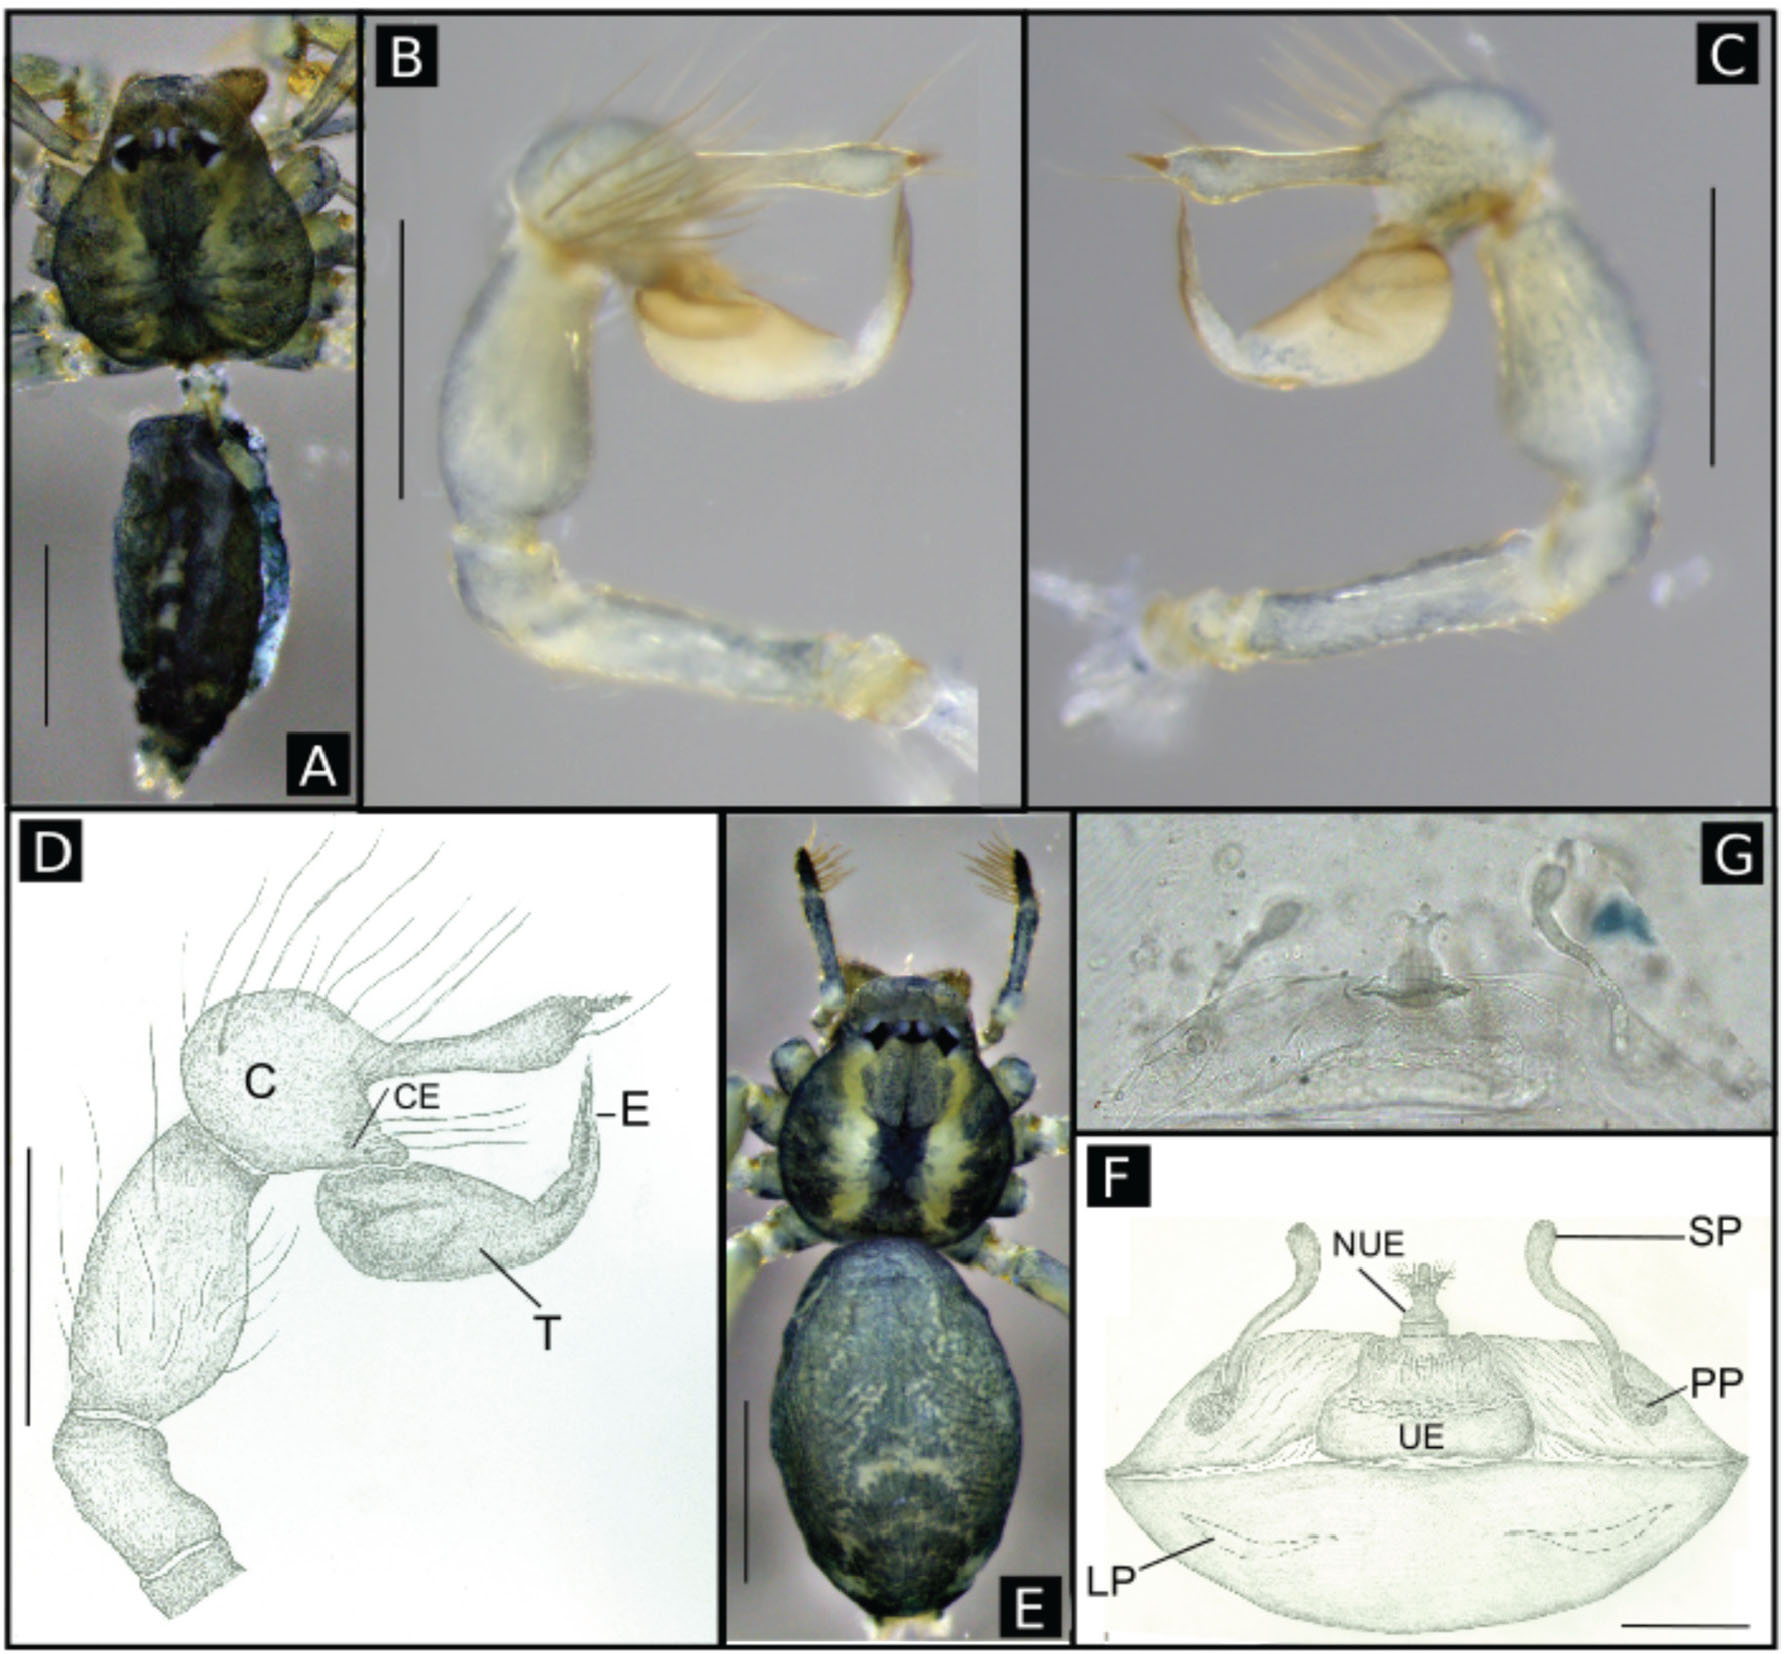 Full article: Three new species of the genus Speocera (Araneae:  Ochyroceratidae) from caves of the state of Minas Gerais, Brazil